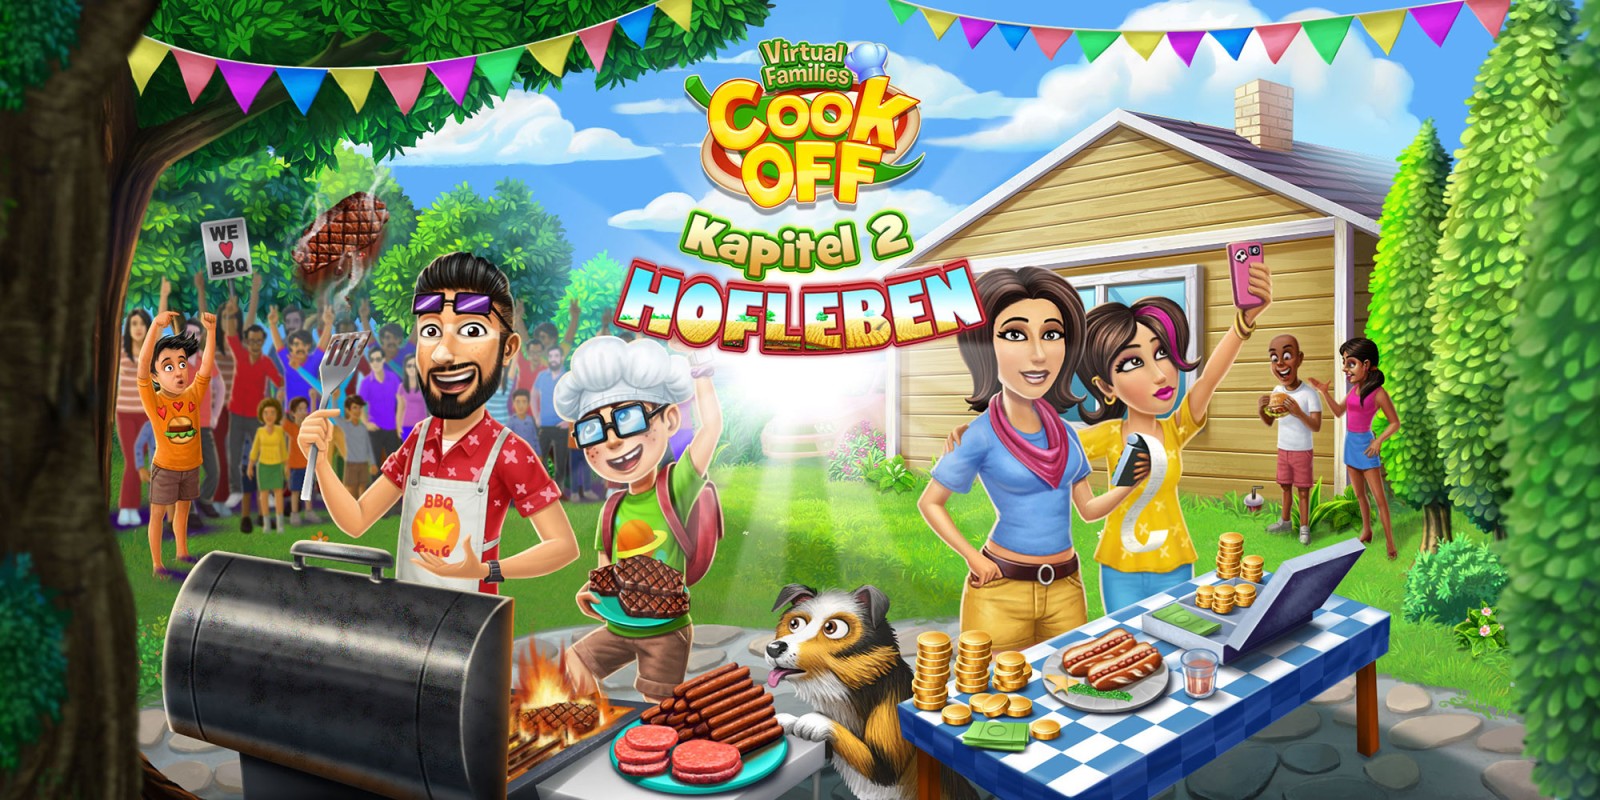 Virtual Families Cook Off: Kapitel 2 - Hofleben